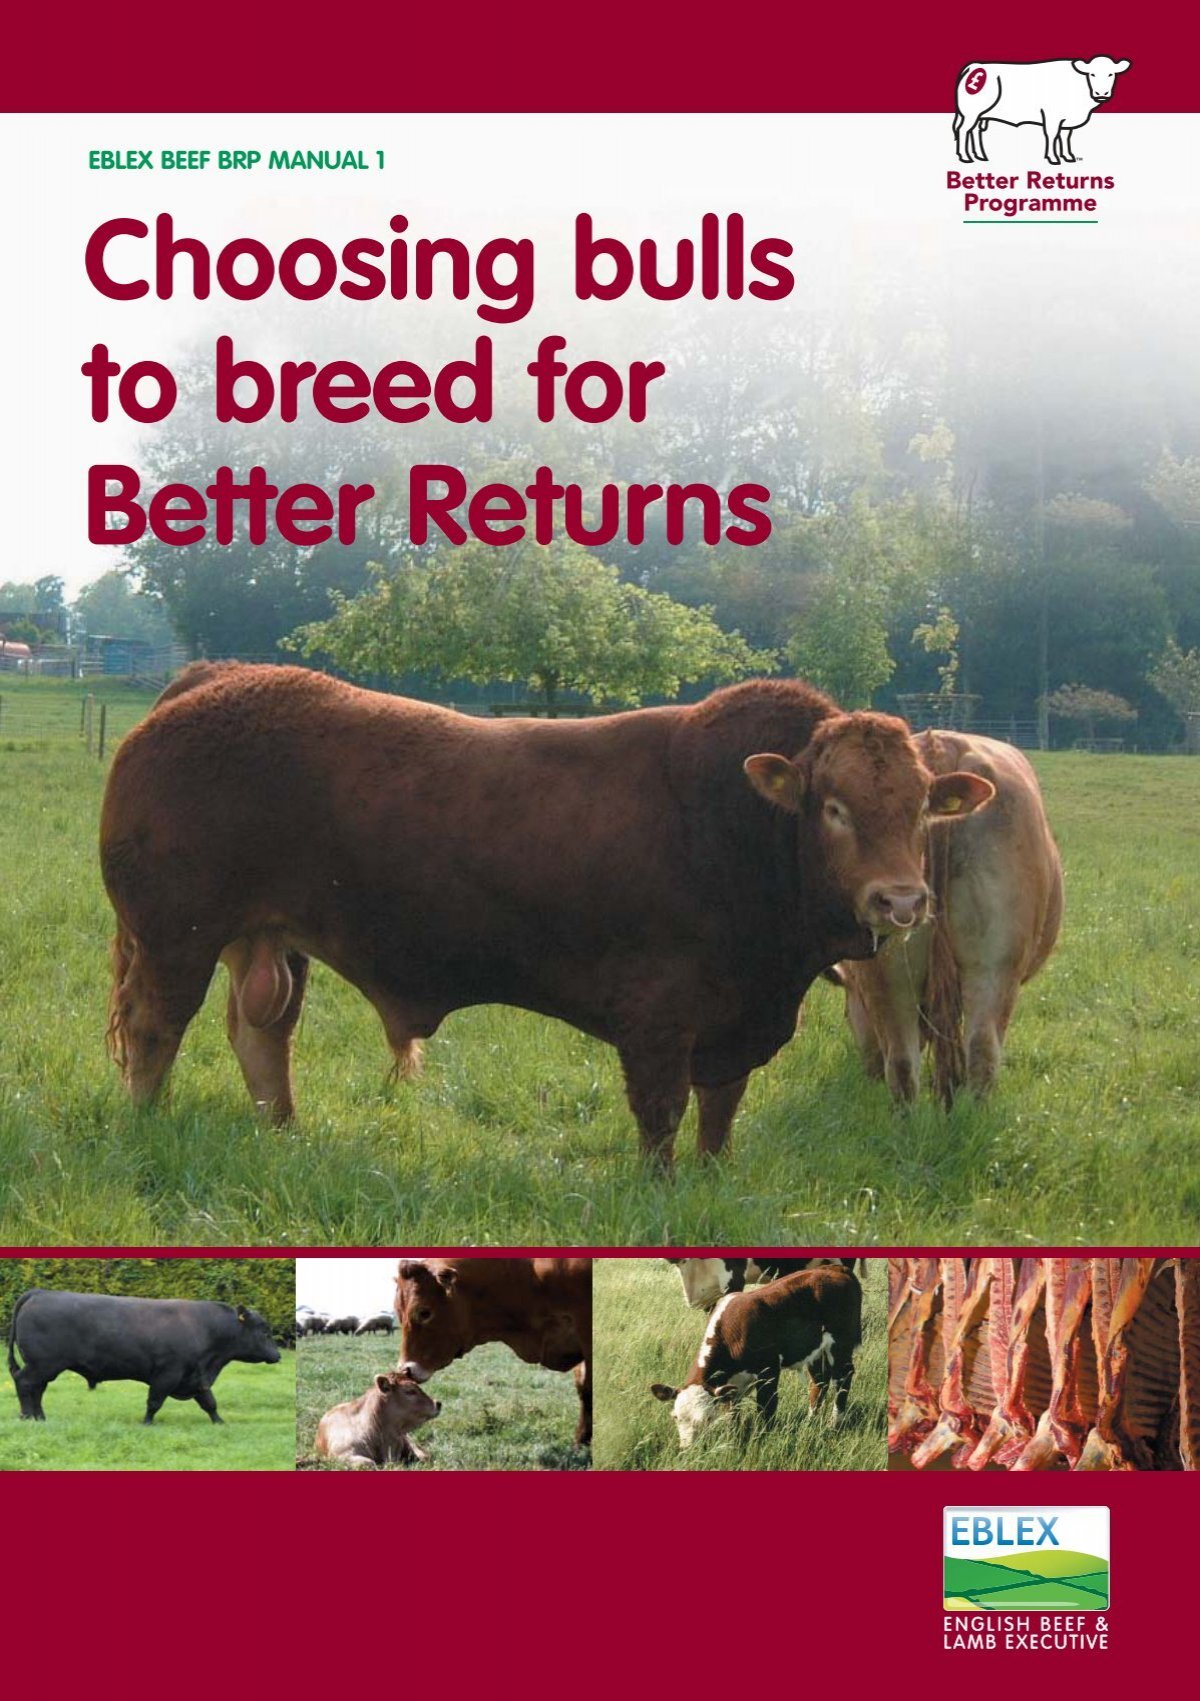 Manual 1 â Choosing bulls to breed for better returns - Eblex